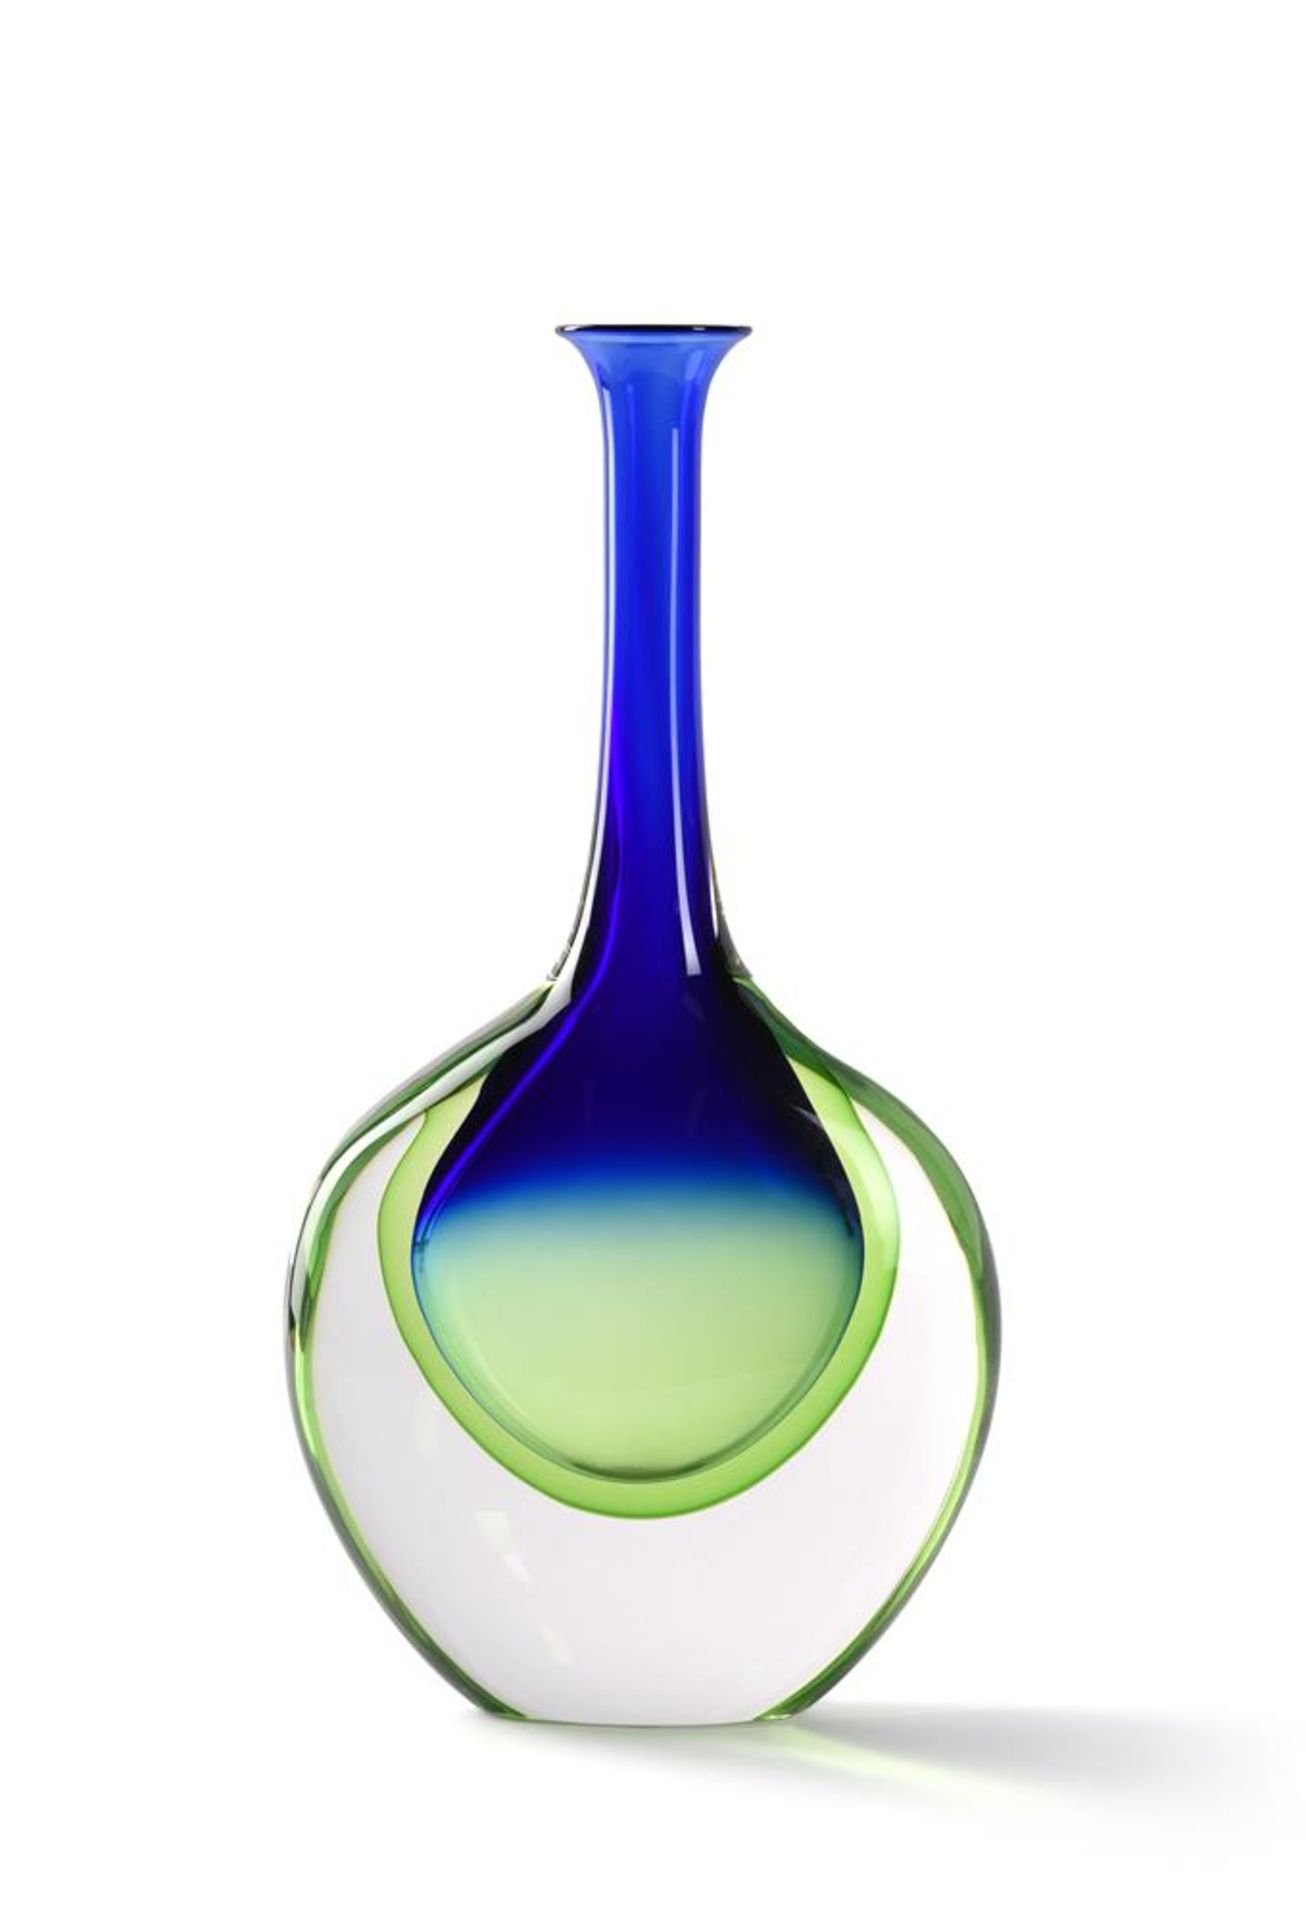 JULIO CESI FOR MURANO, A GLASS VASE - Image 2 of 4